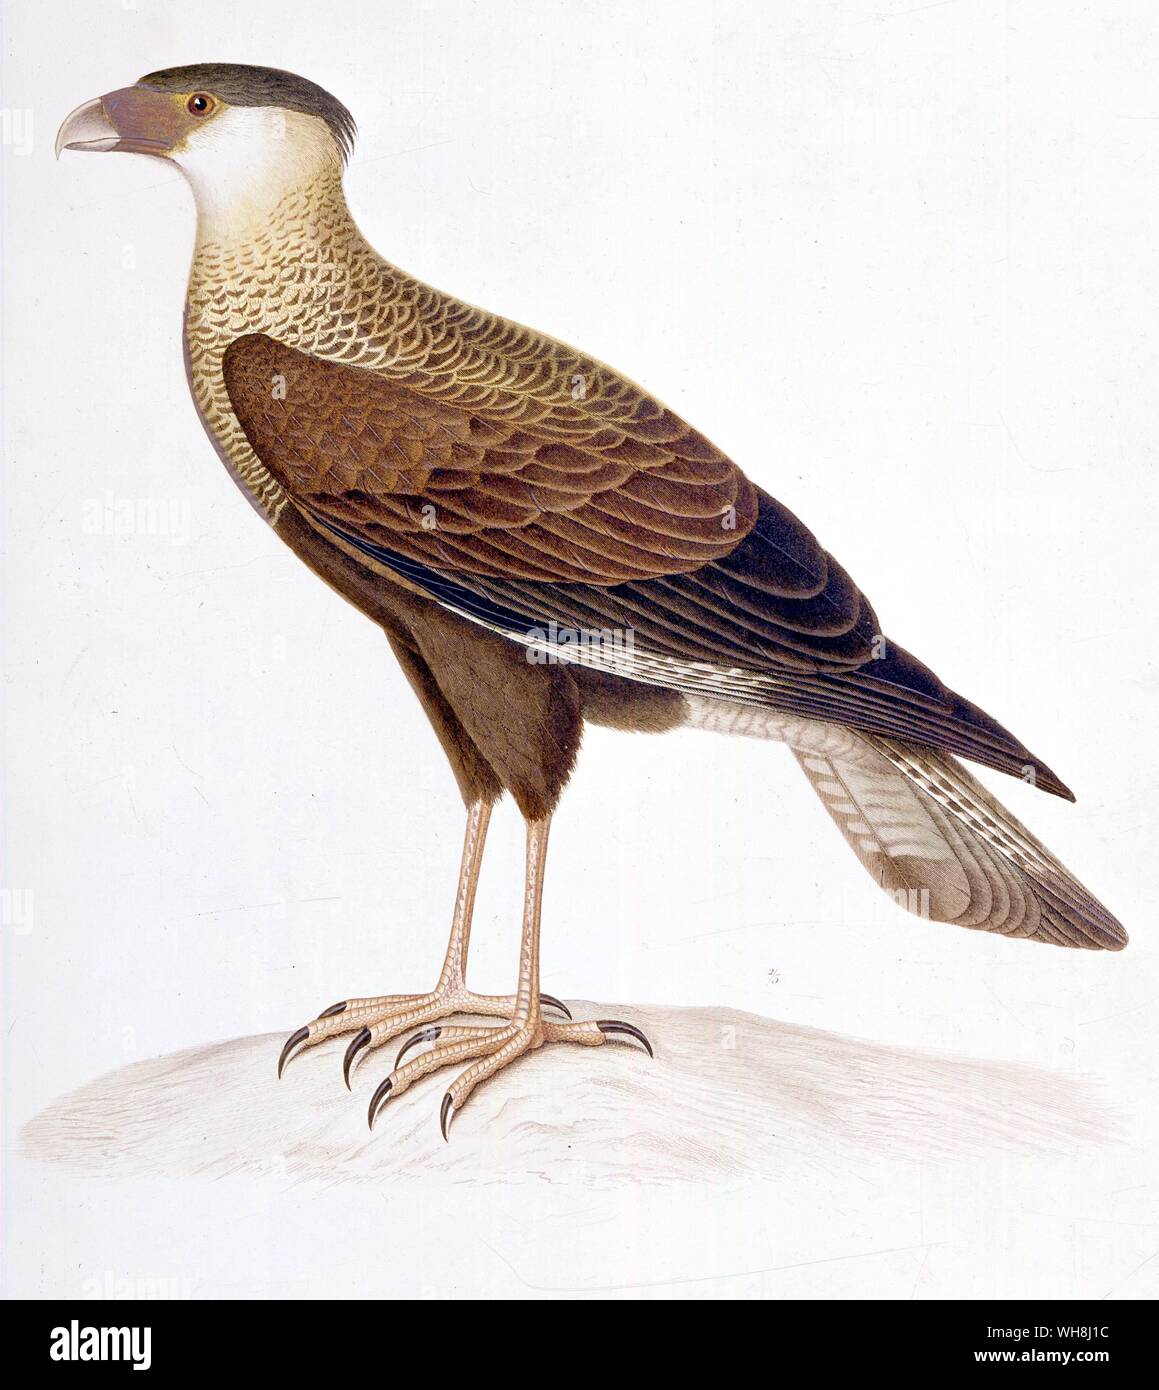 Carrion-feeding hawk (Caracara vulgaris) from Darwin and the Beagle by Alan Moorhead, page 172. Stock Photo